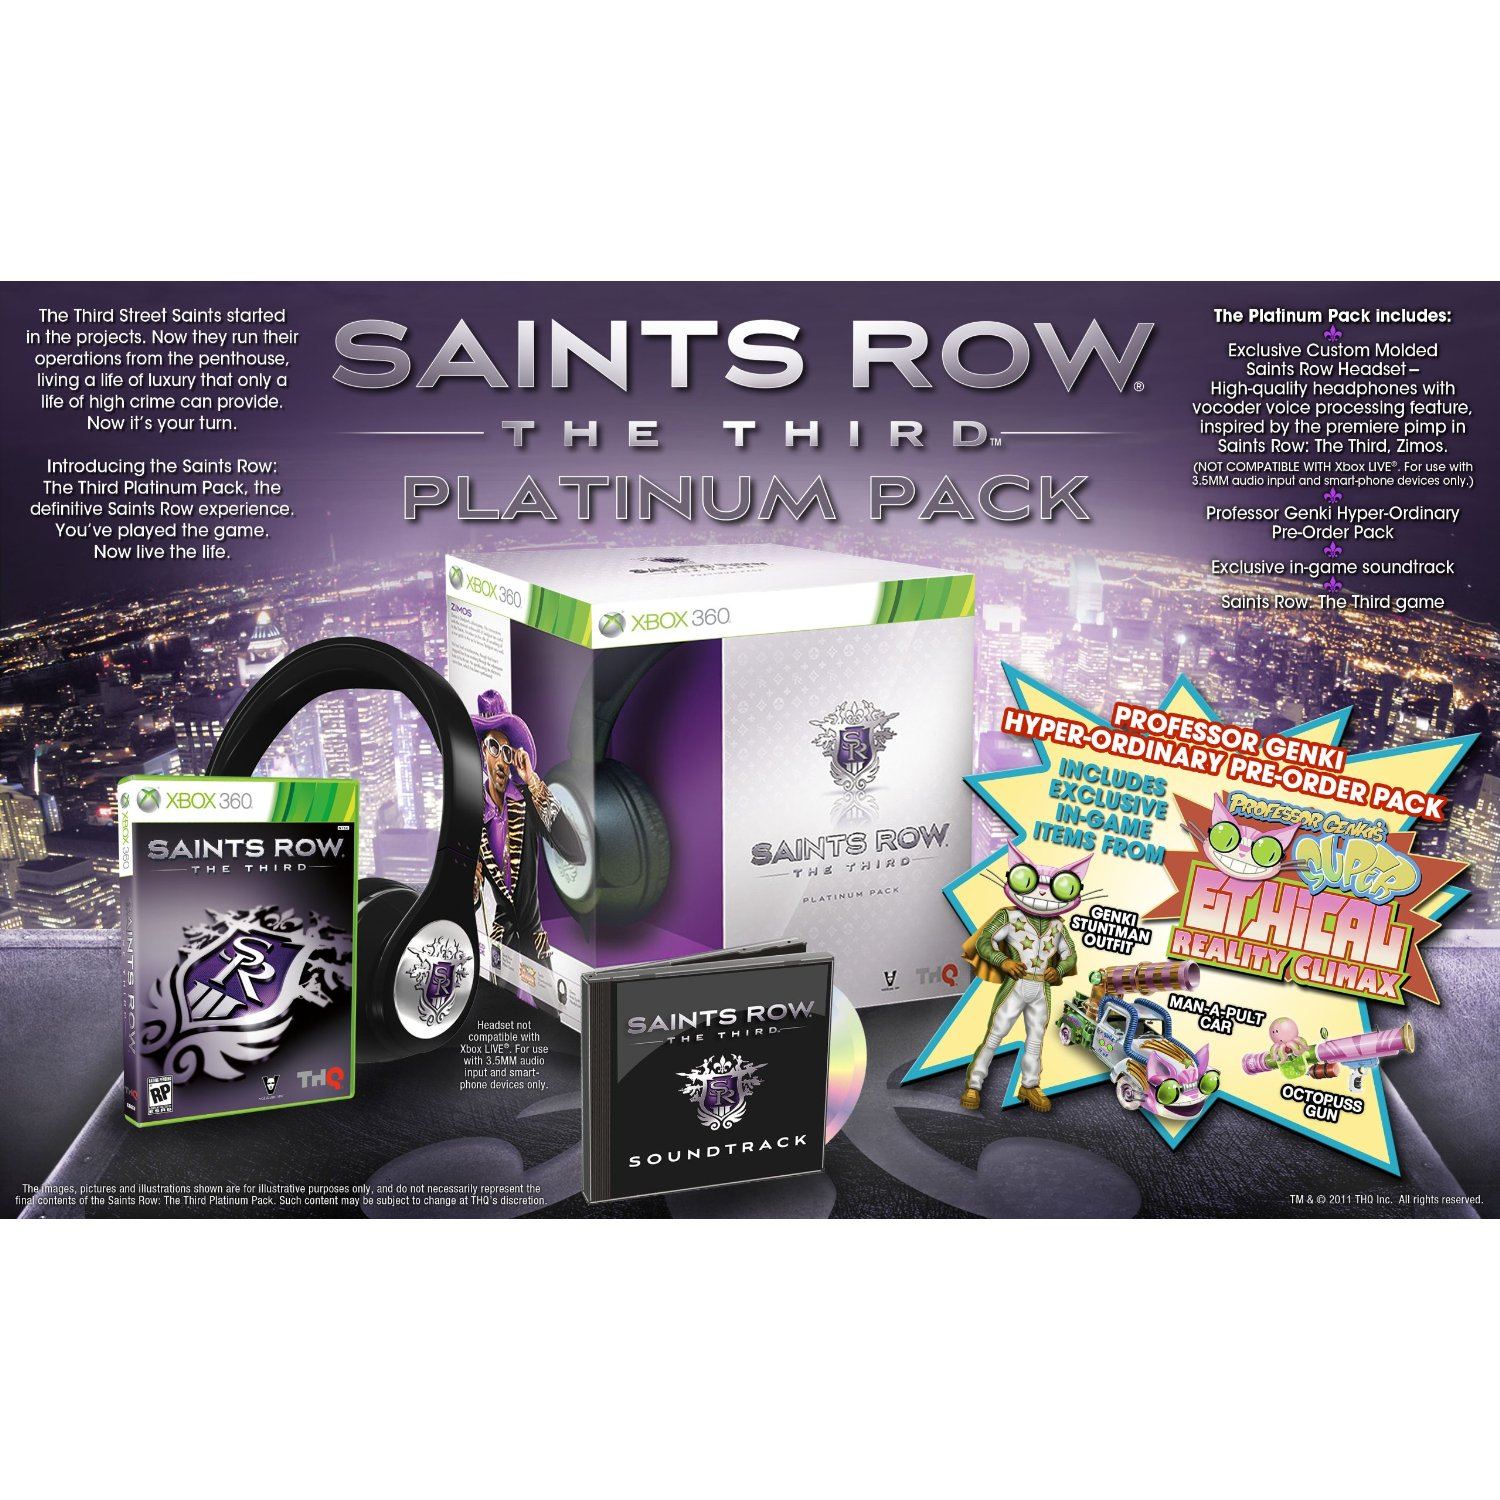 Saints Row The Third Platinum Pack